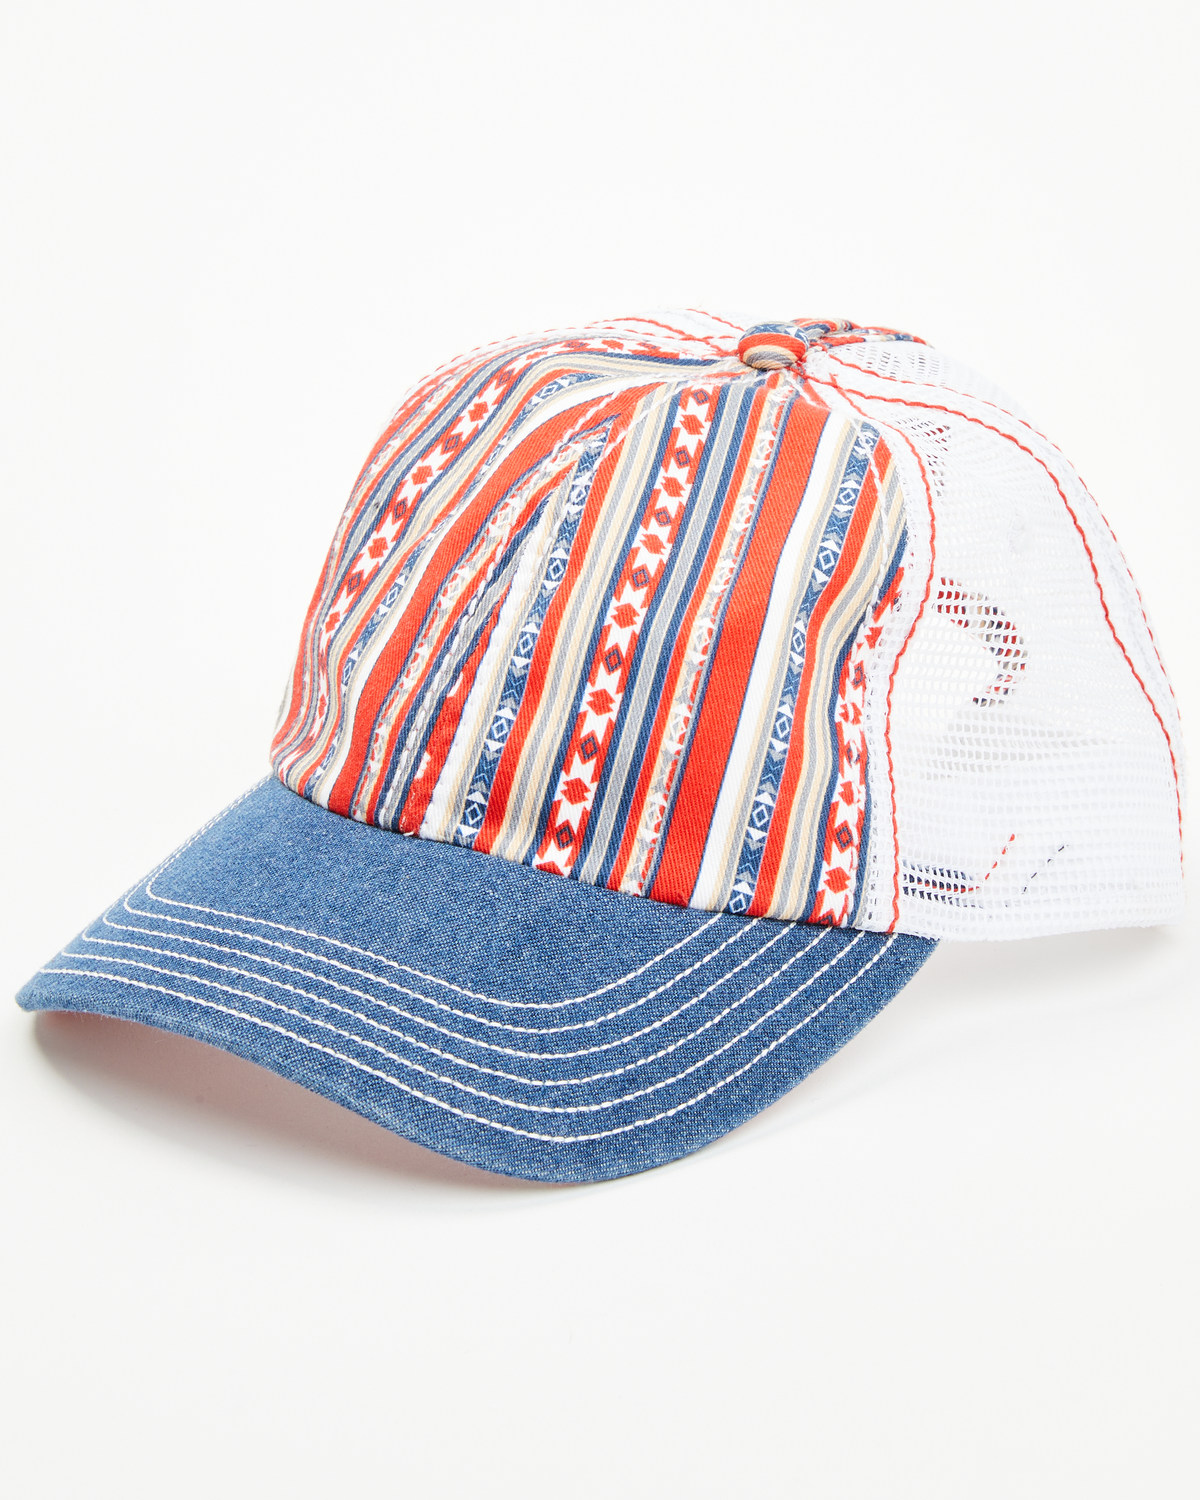 Trenditions Women's Catchfly Southwestern Striped Print Ball Cap